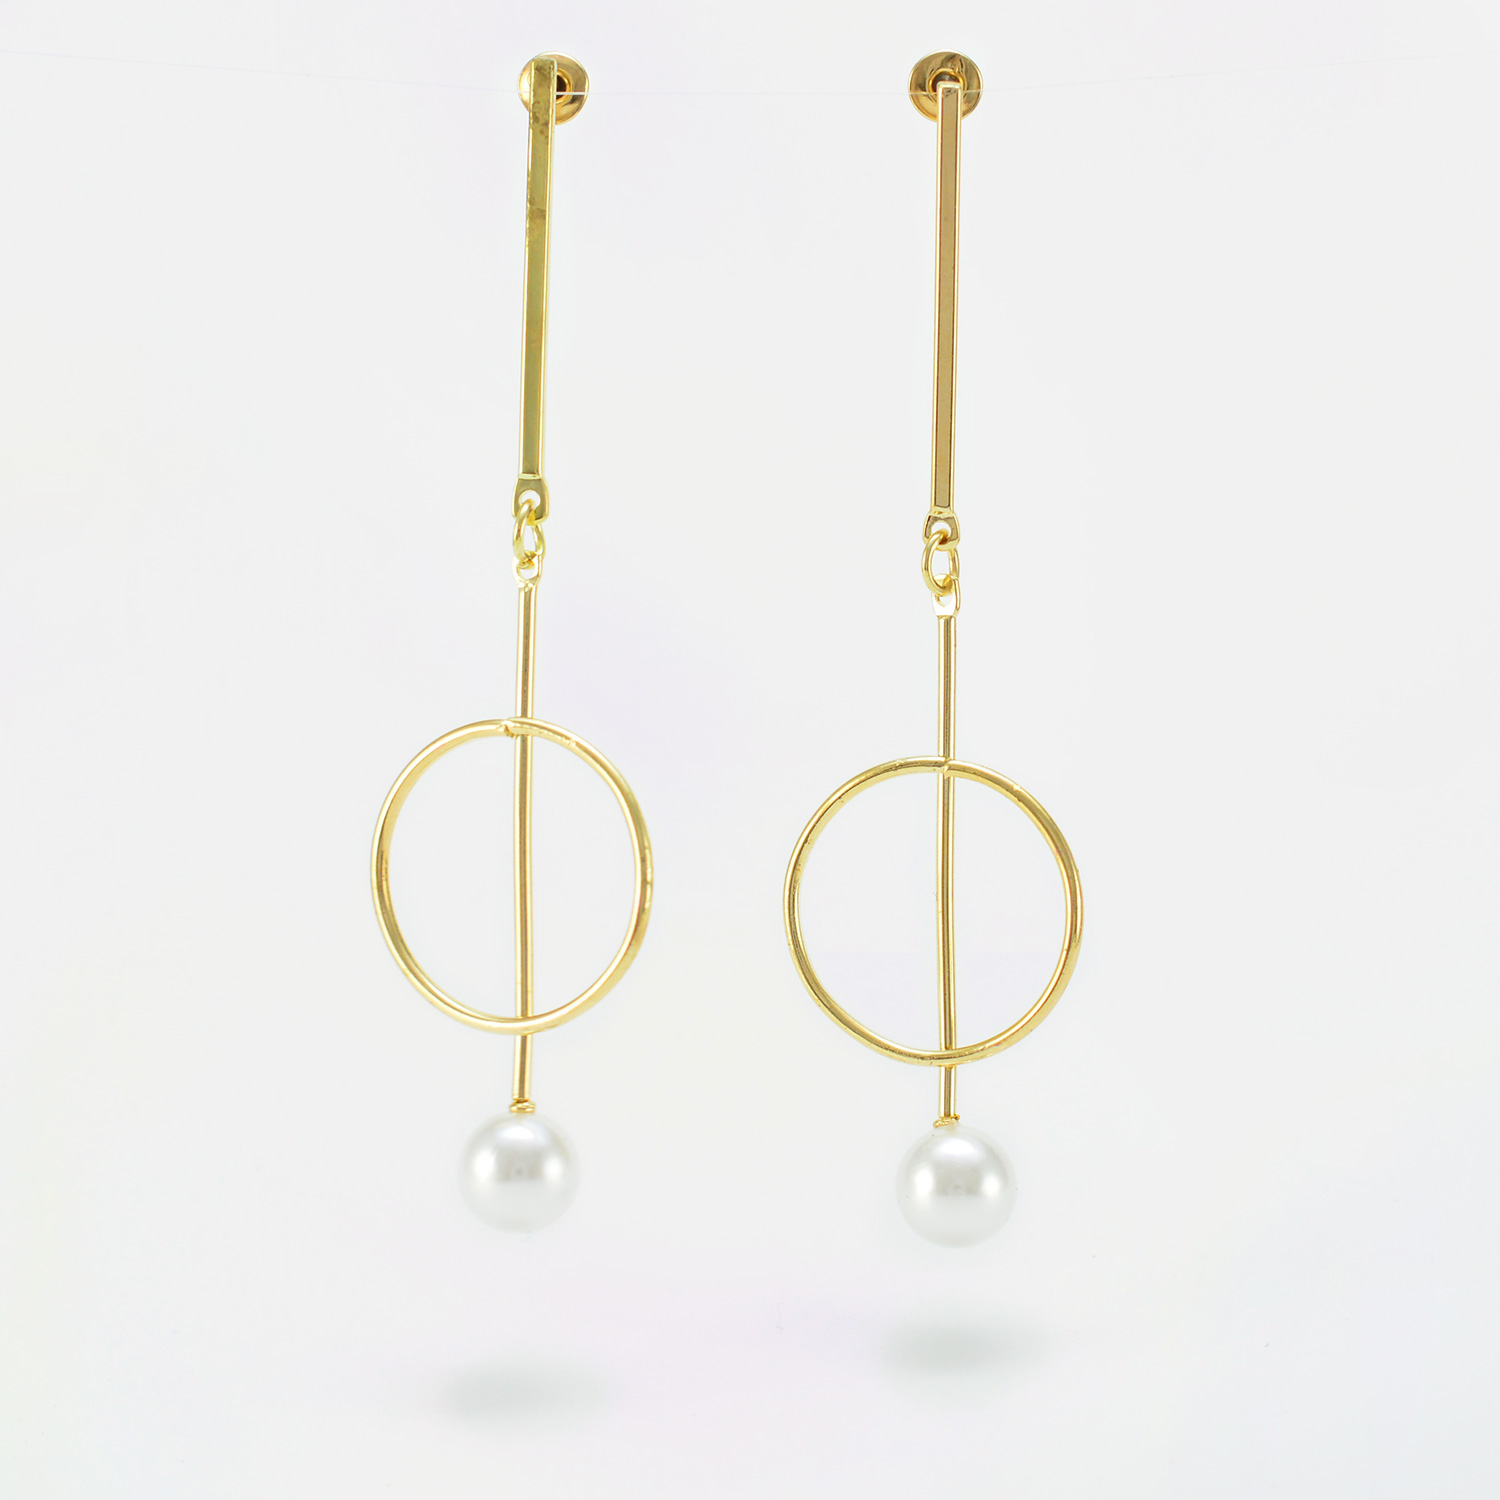 Stunning Designed Round Golden Color Shape Earrings set